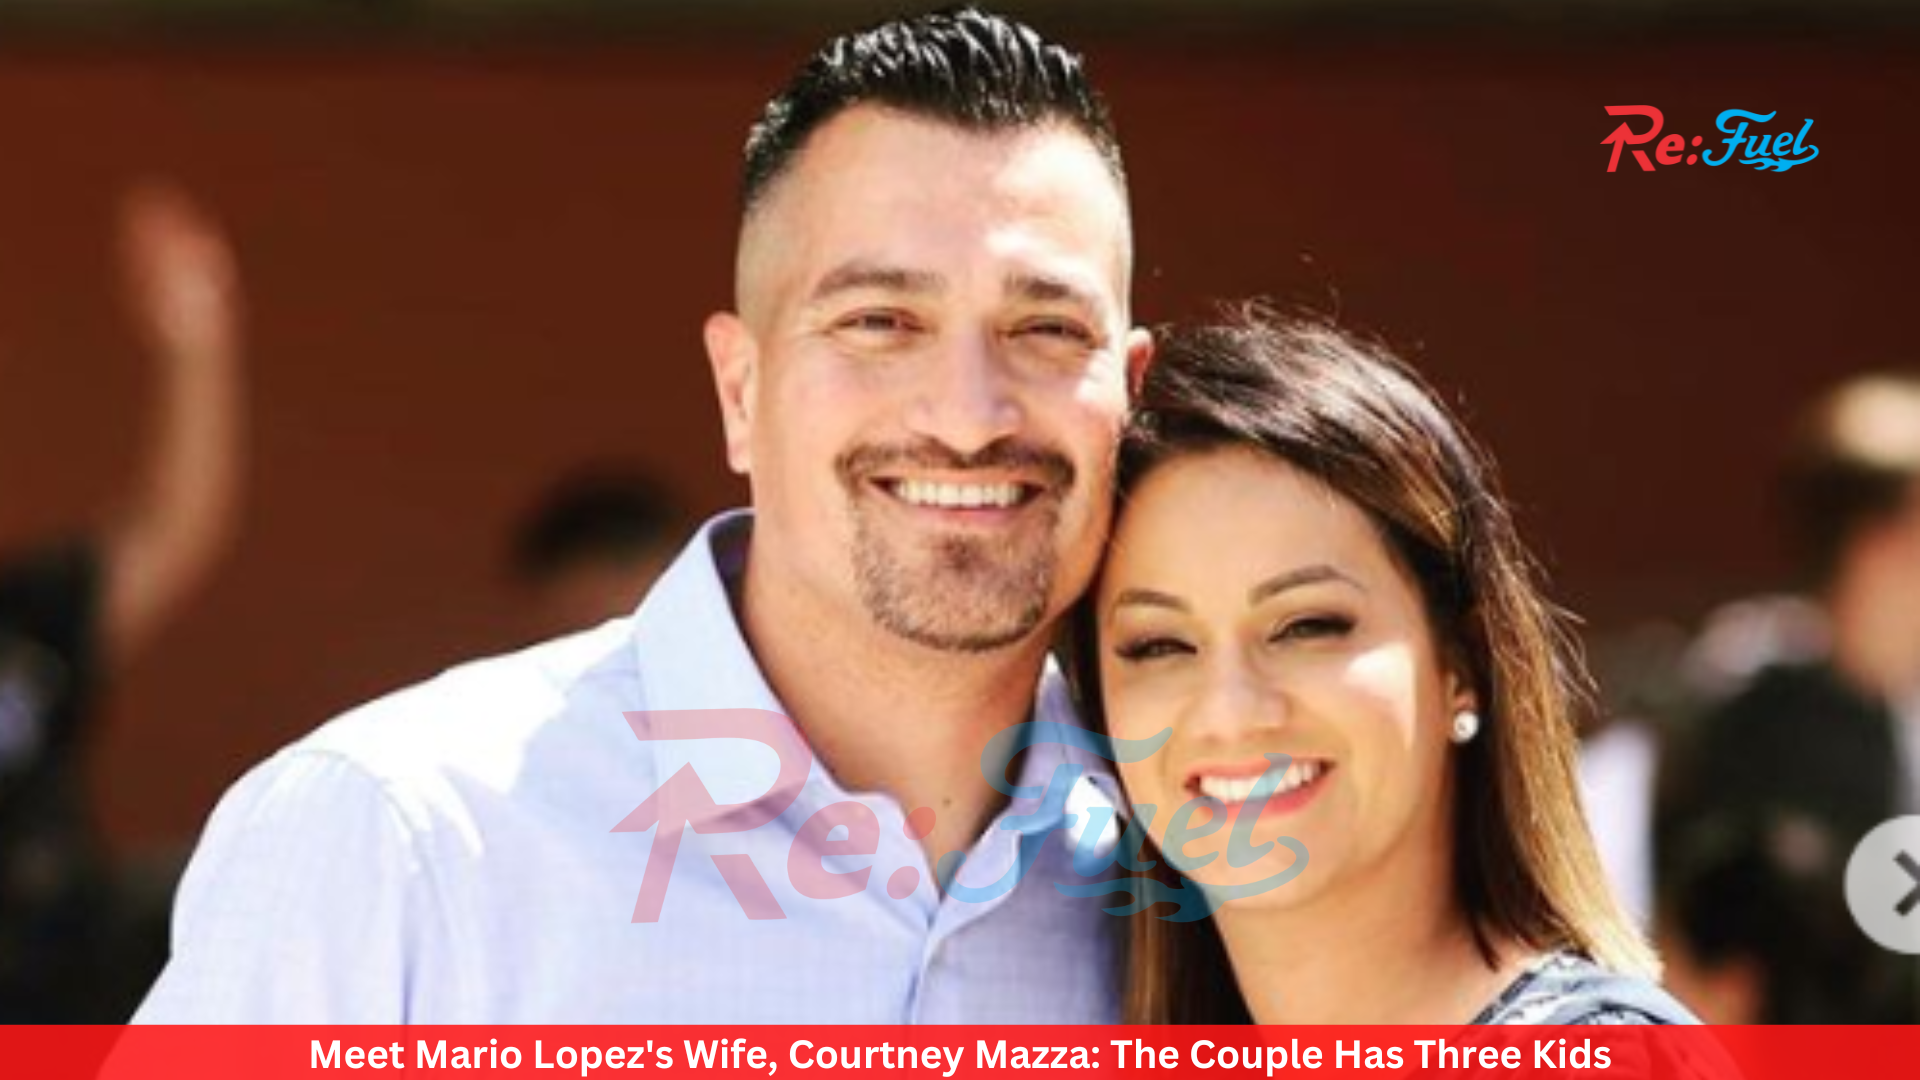 Meet Mario Lopez's Wife, Courtney Mazza: The Couple Has Three Kids